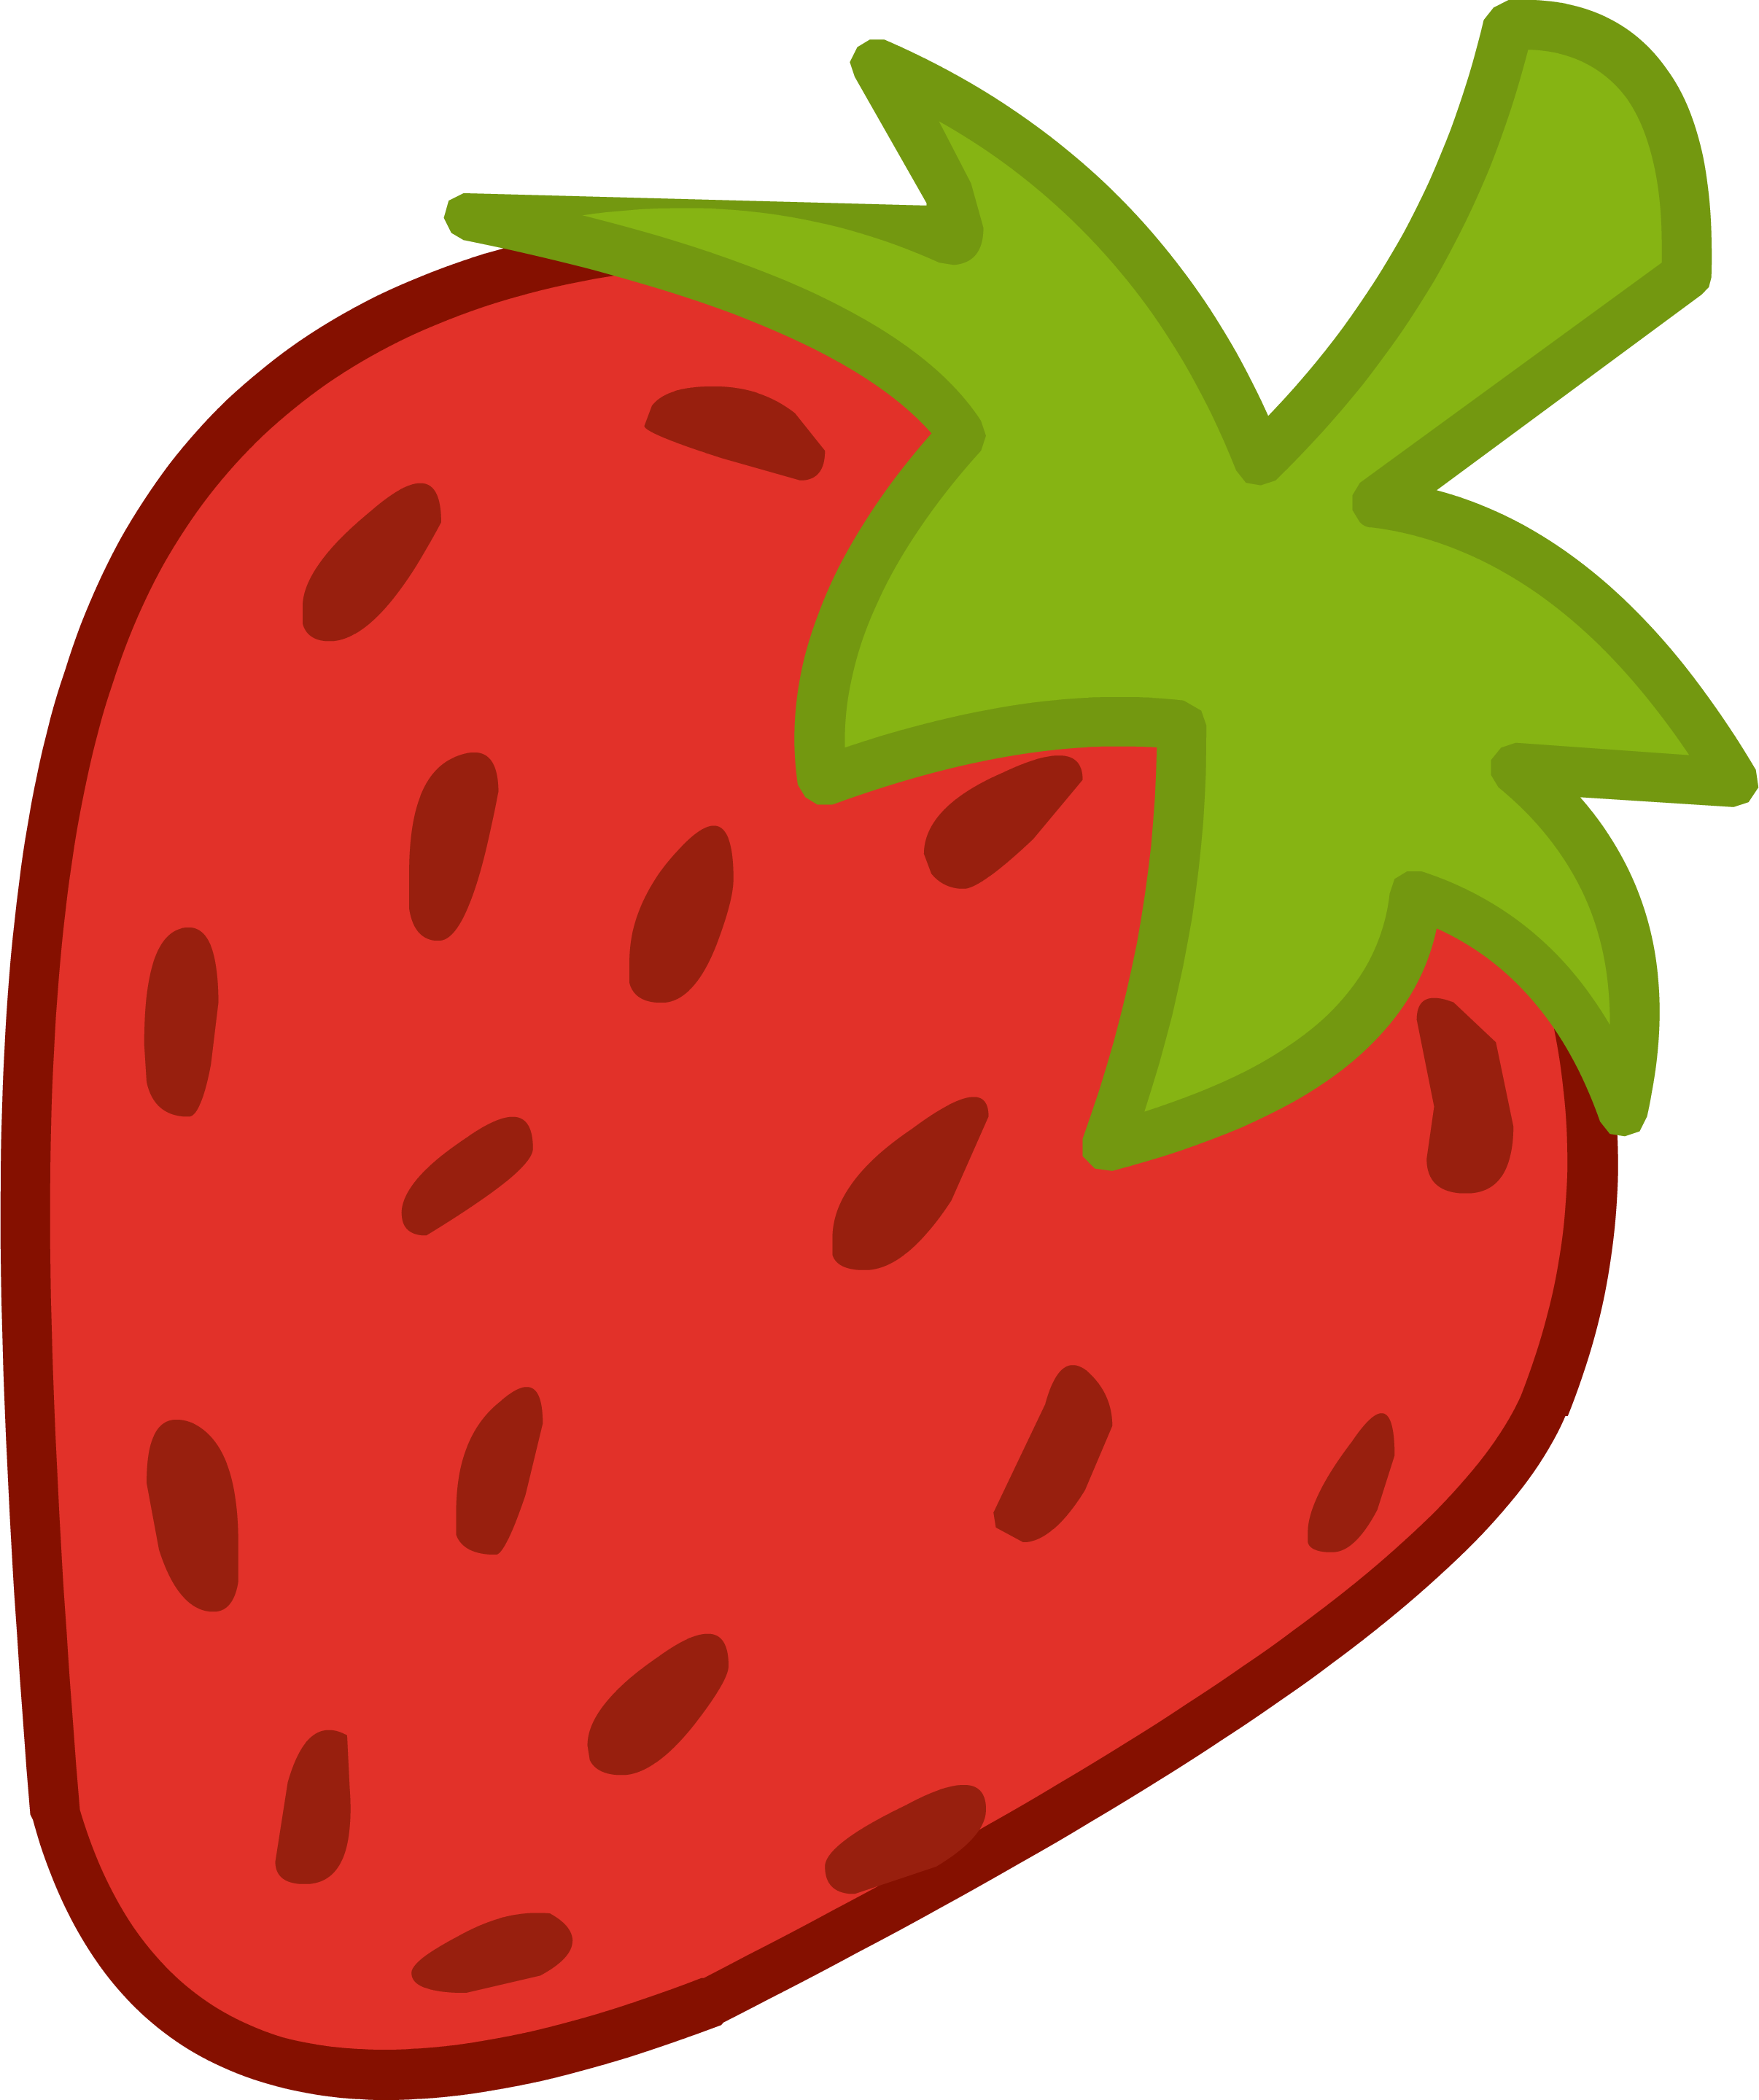 Cartoon strawberry clipart WikiClipArt